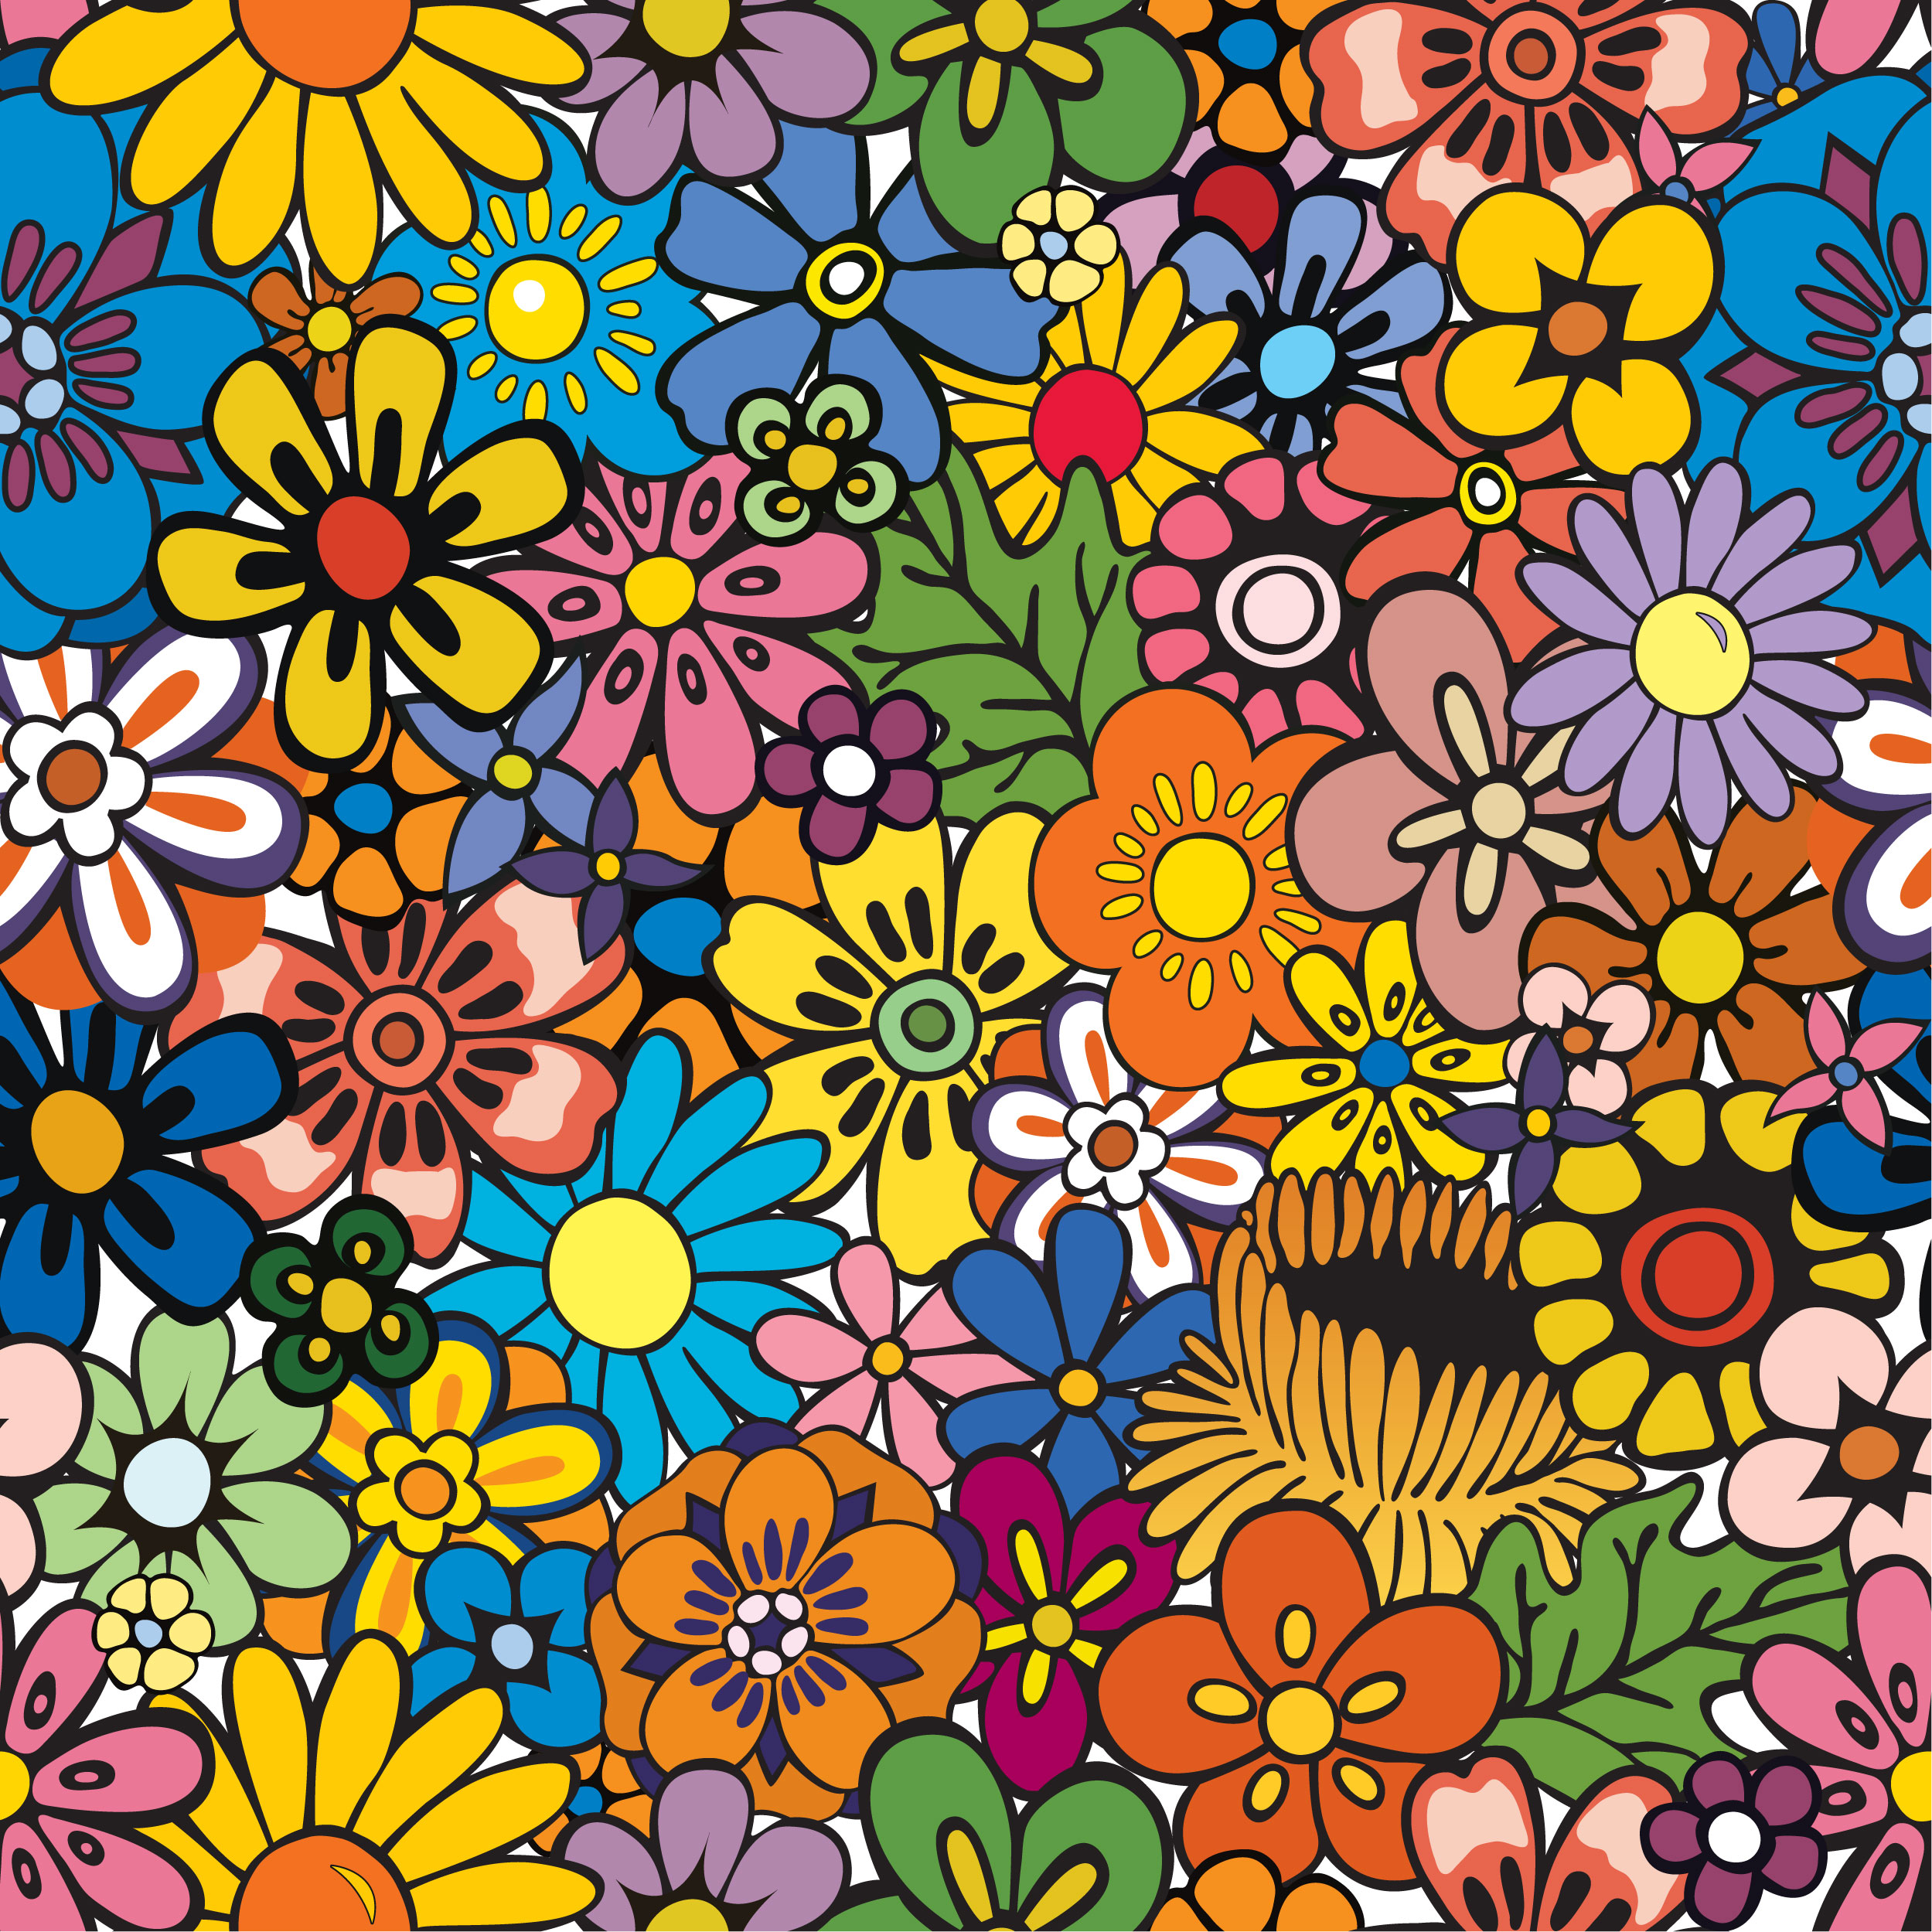 Free Download No121 2499x2499 For Your Desktop Mobile Tablet Explore 60 Flower Power Background Flower Power Wallpaper